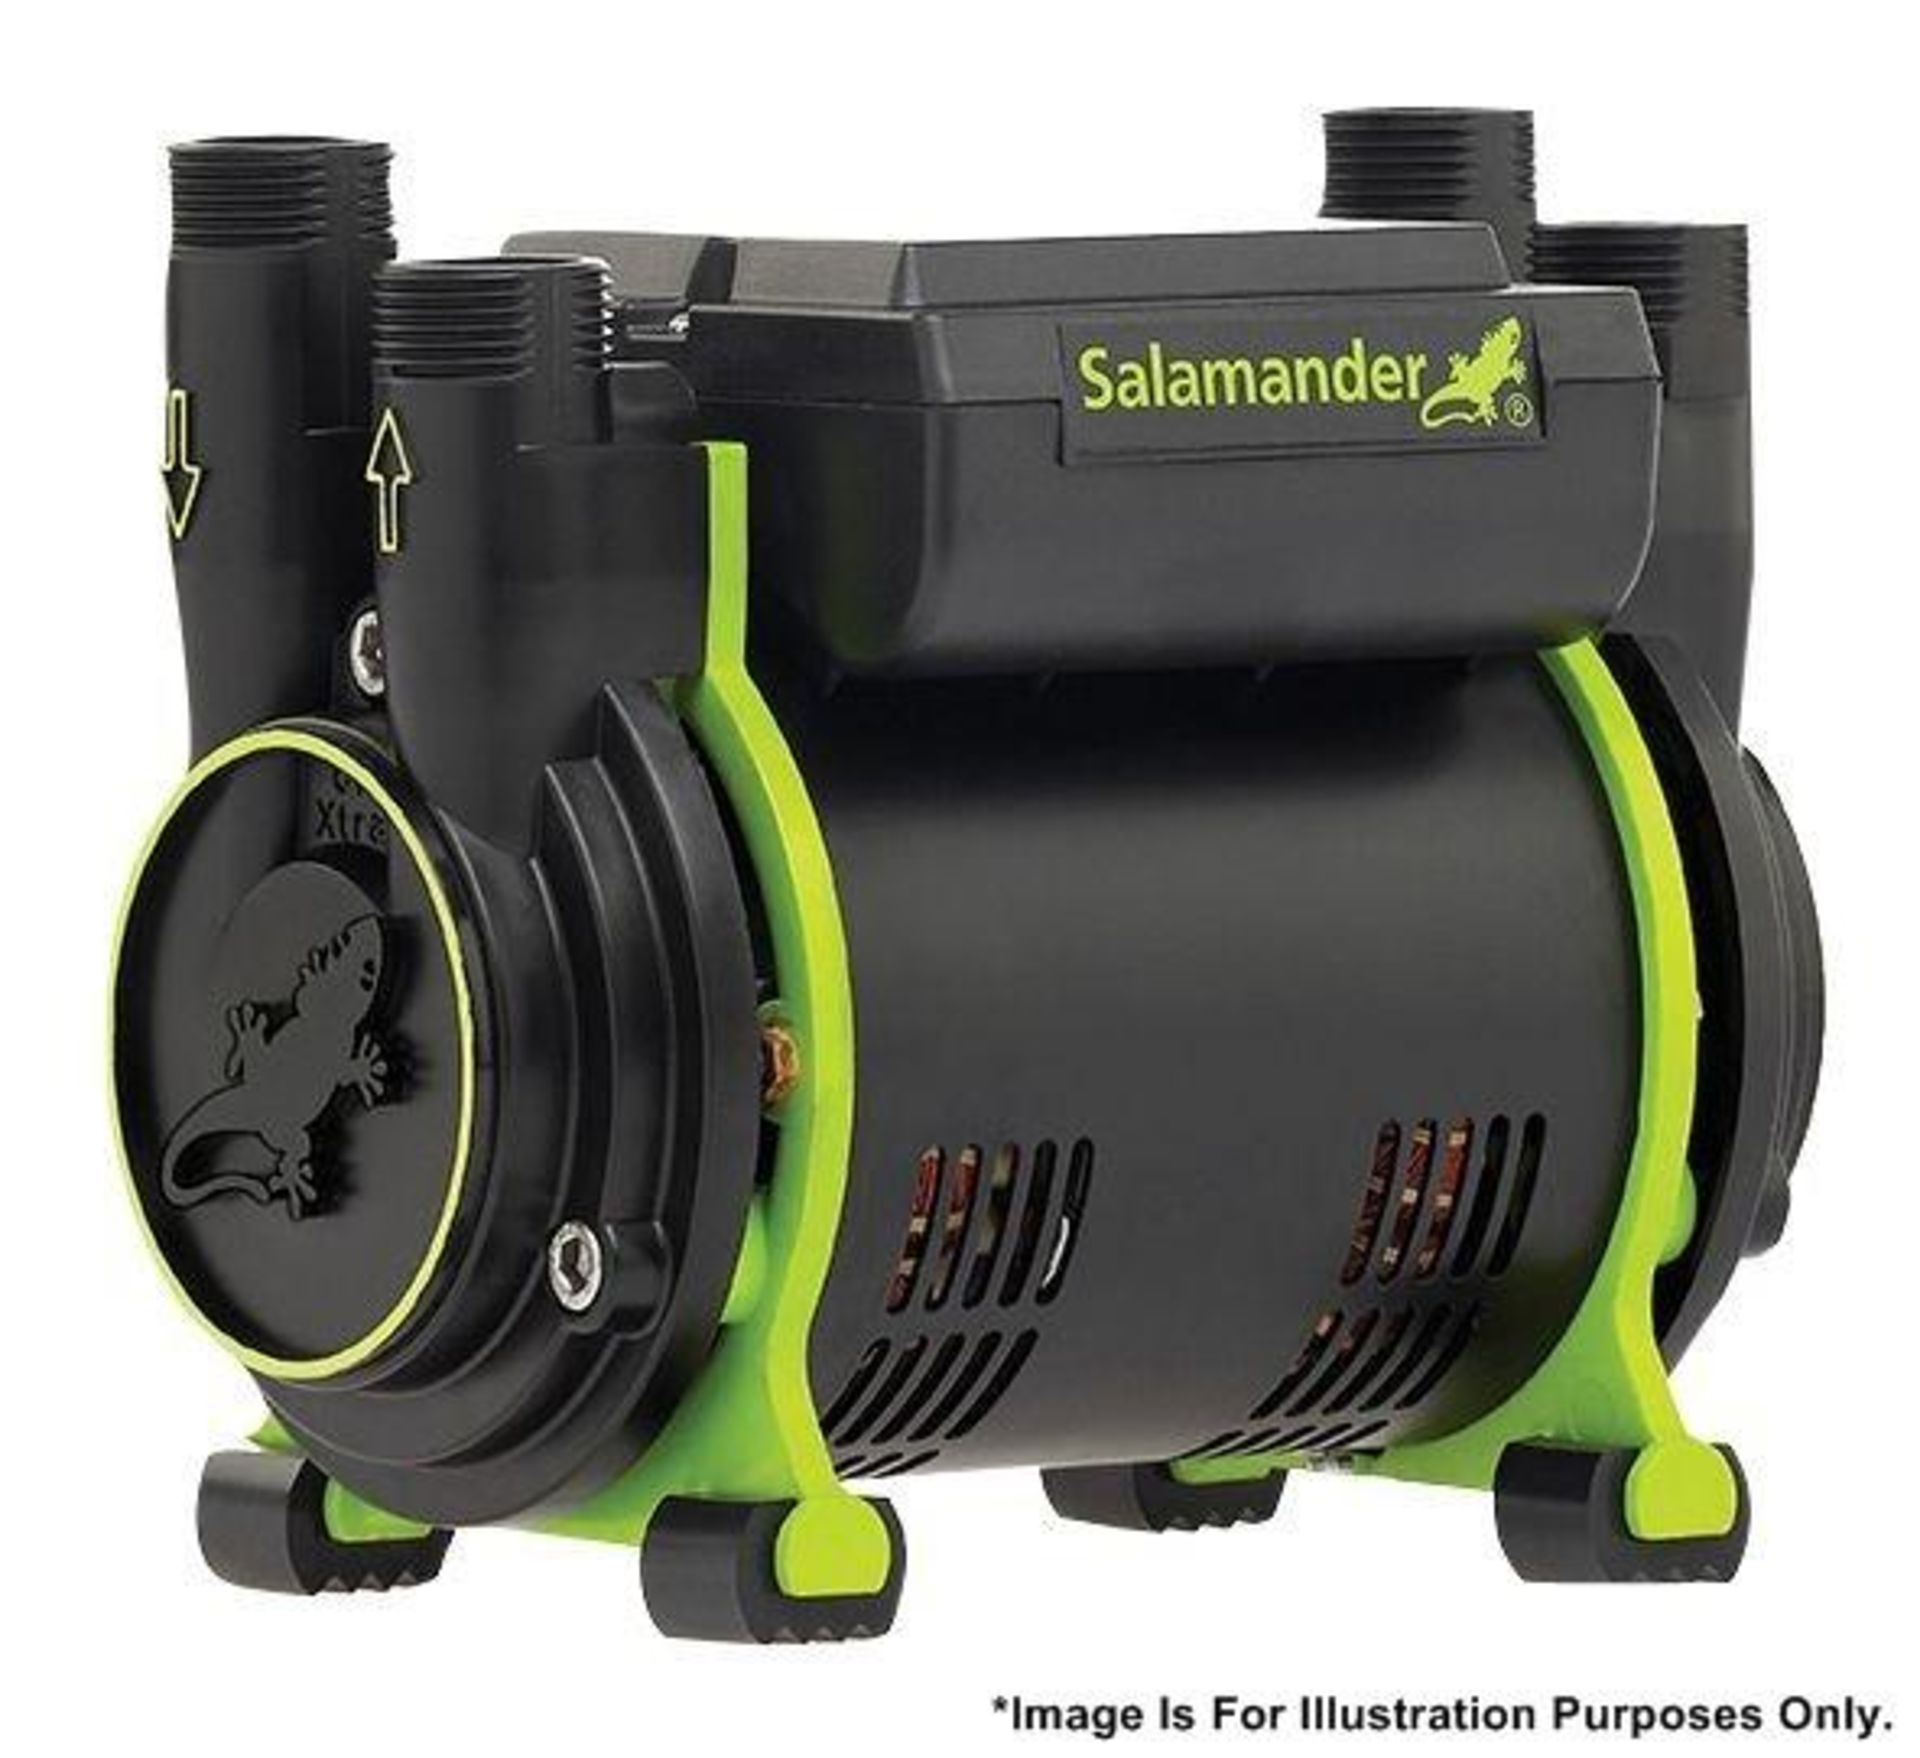 1 x Salamander Xtra CT50 Twin Shower Pump - 1.5bar - Size: 165x120x195cm - Ref: MSC069 - CL190 -